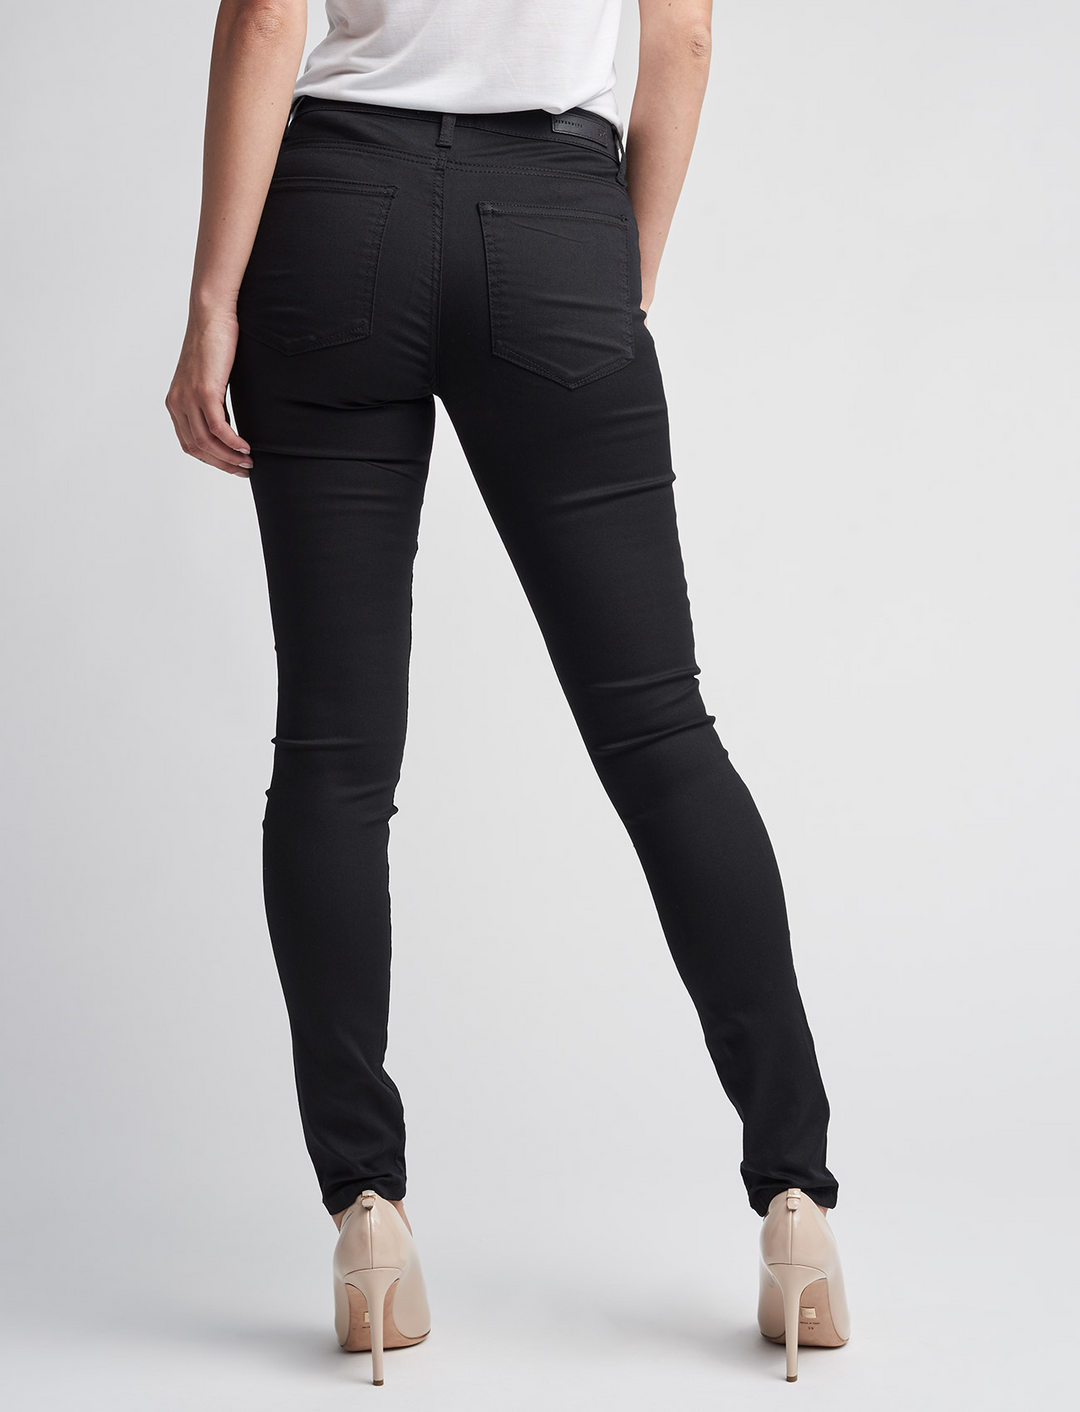 Penelope 603 black jeans